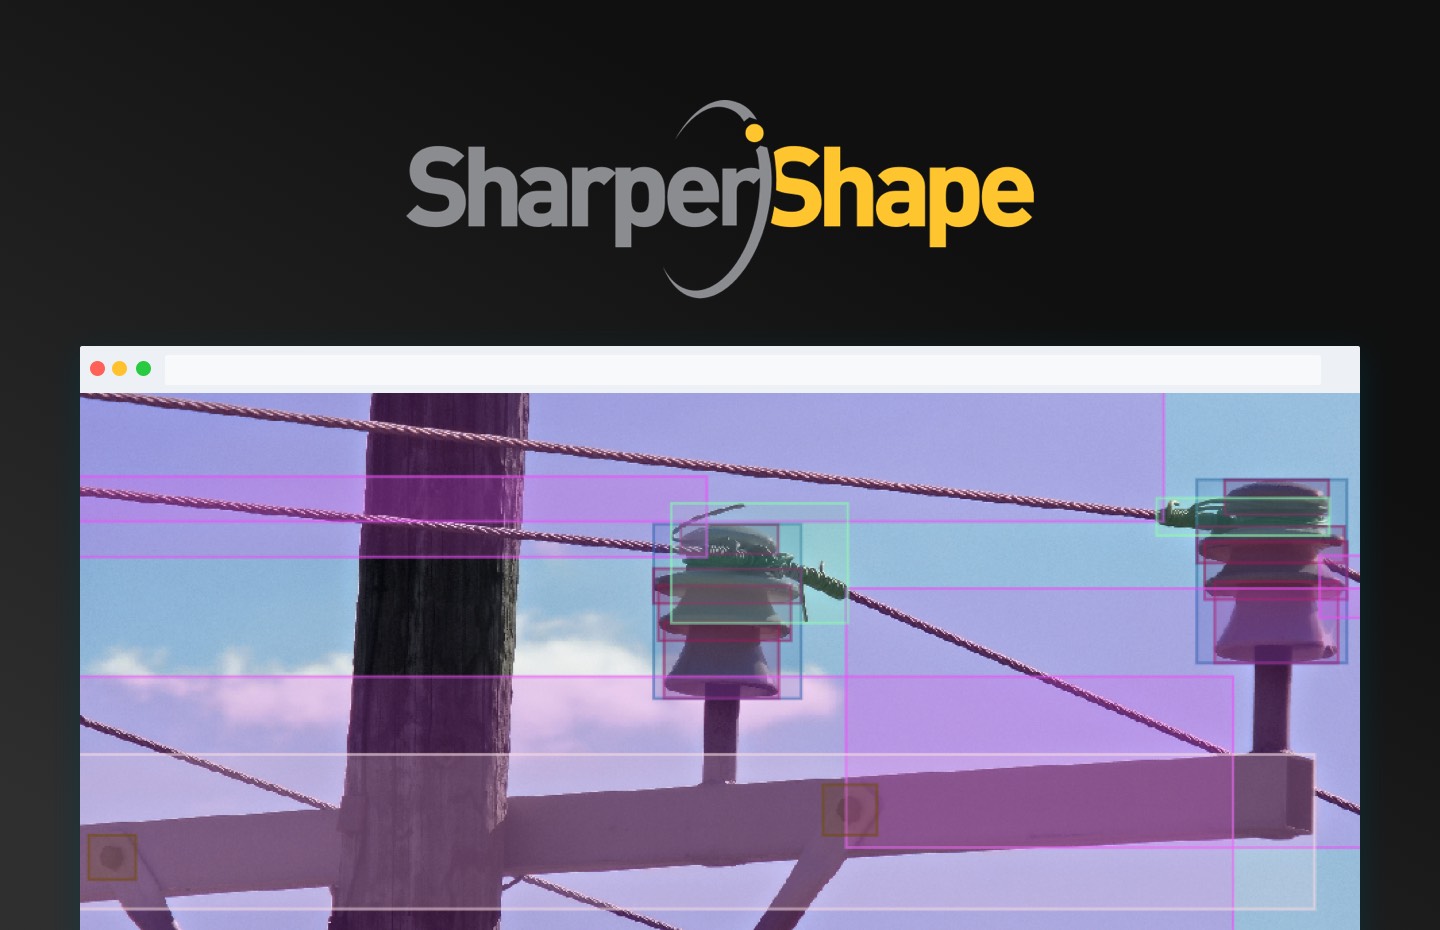 Sharper Shape